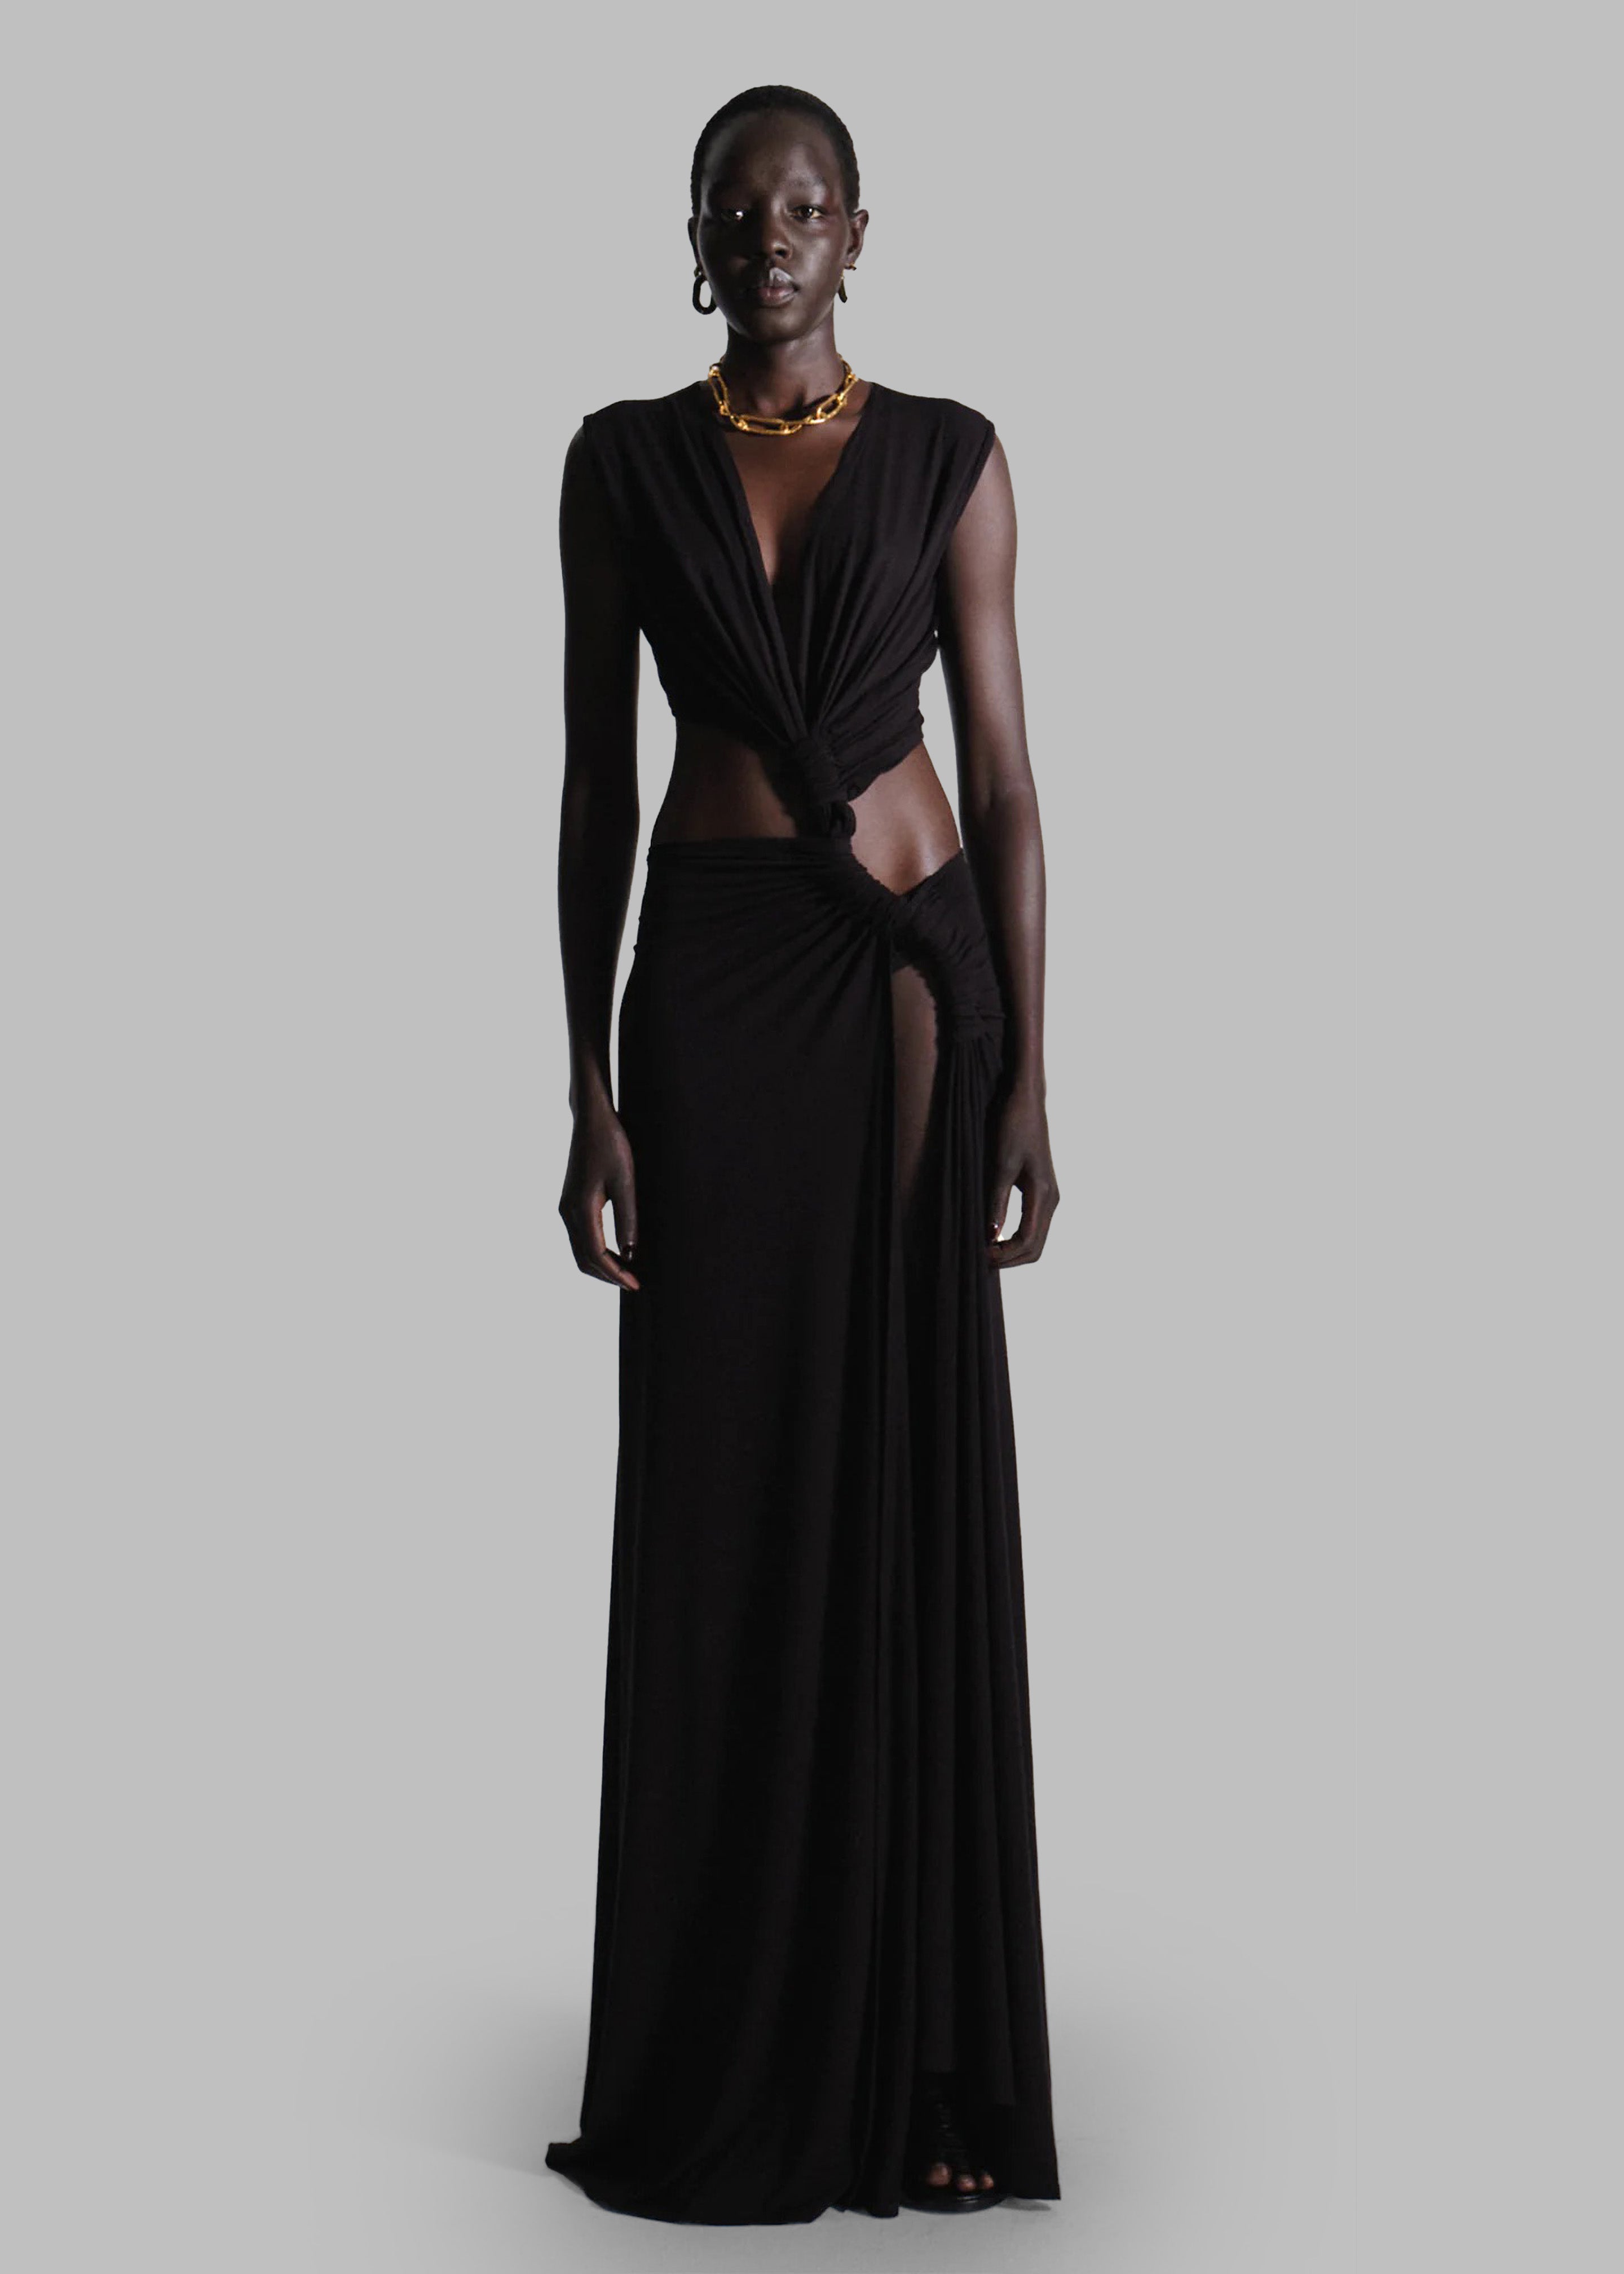 Sid Neigum Triple Loop Knit Dress - Black - 1